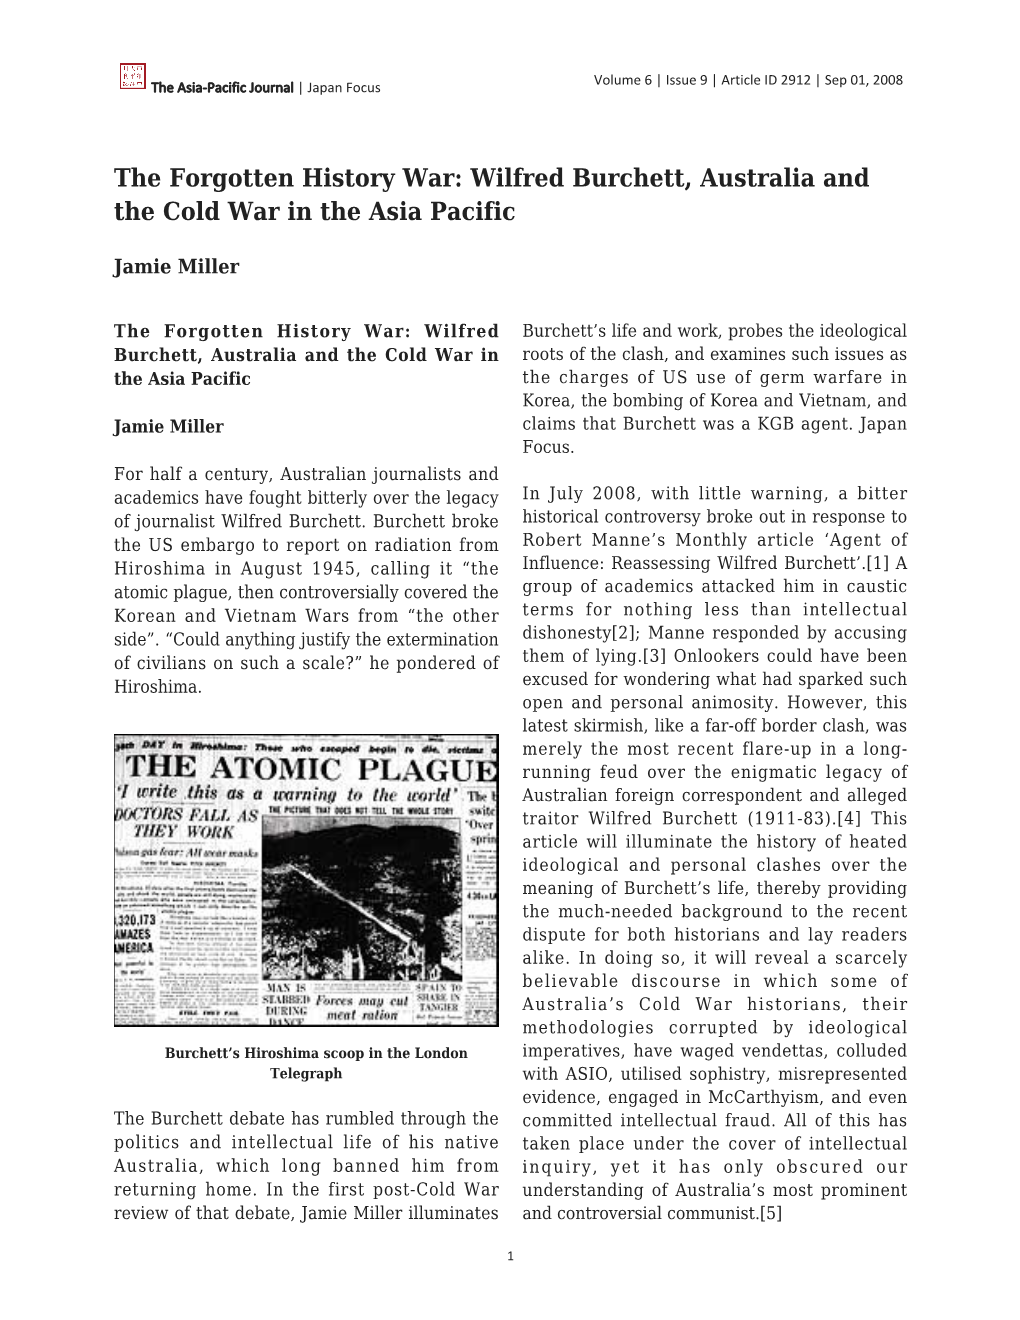 Wilfred Burchett, Australia and the Cold War in the Asia Pacific